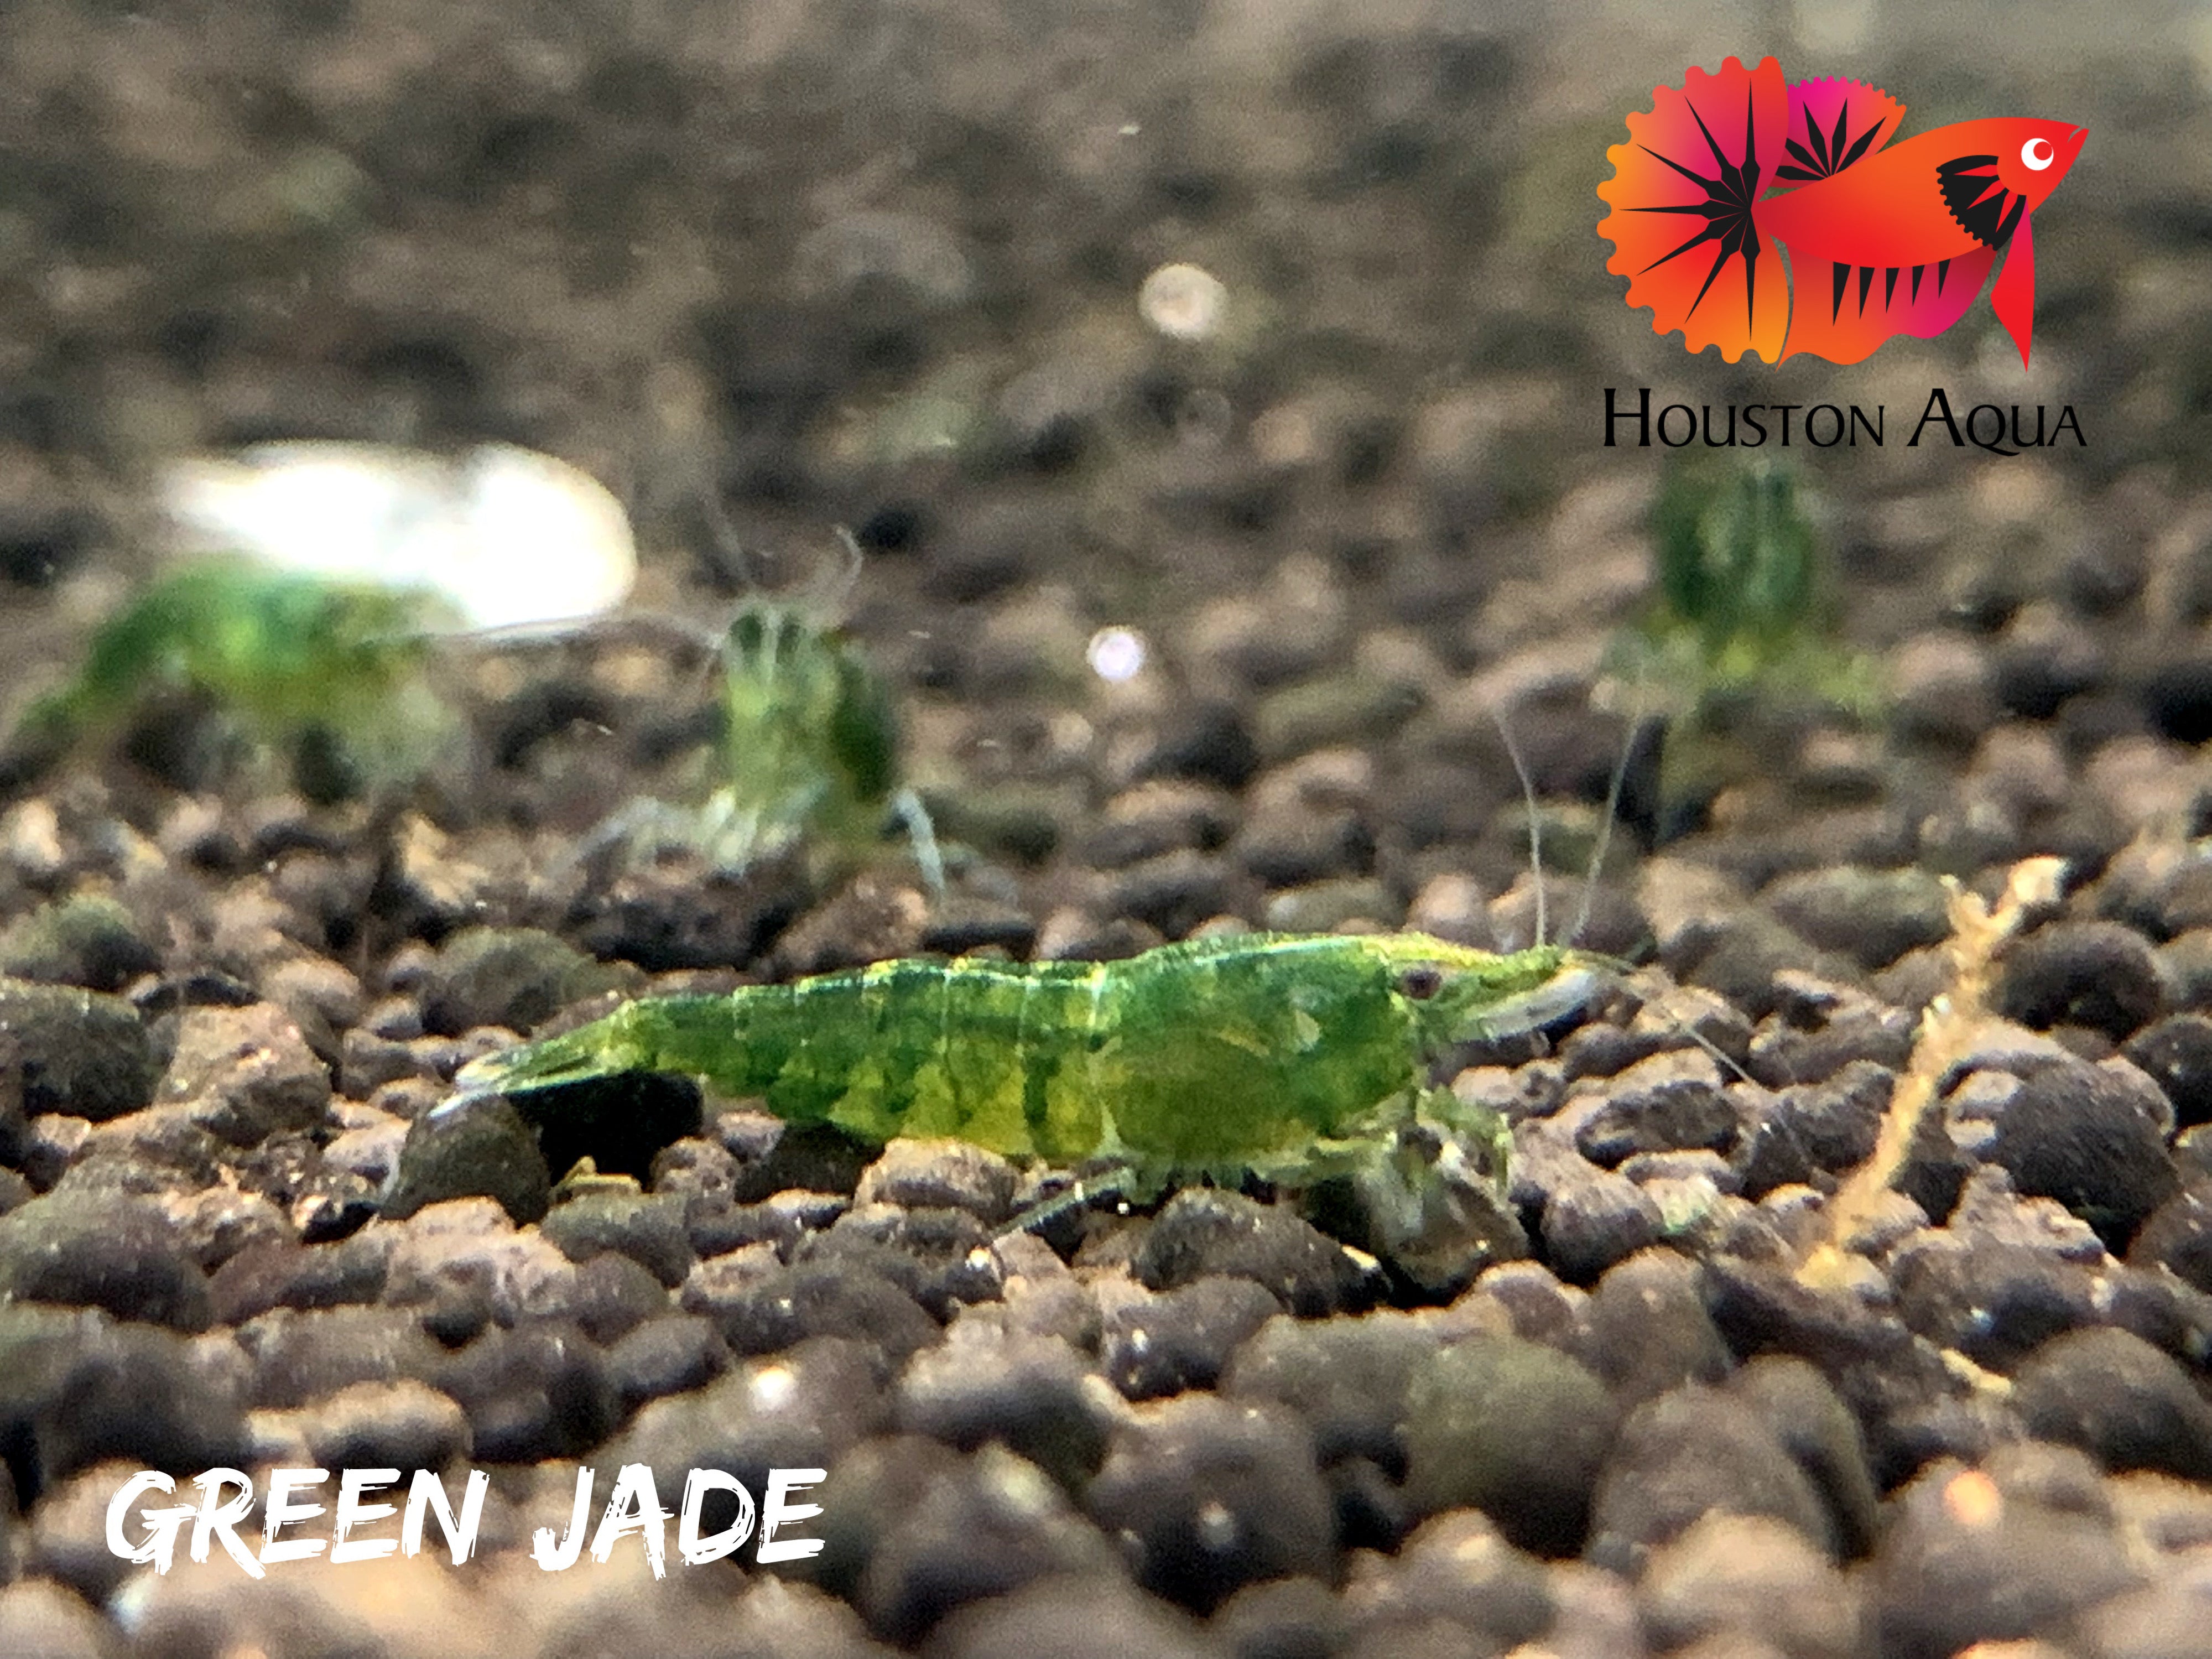 Green Jade Neocaridina Shrimp - Grade SSS++